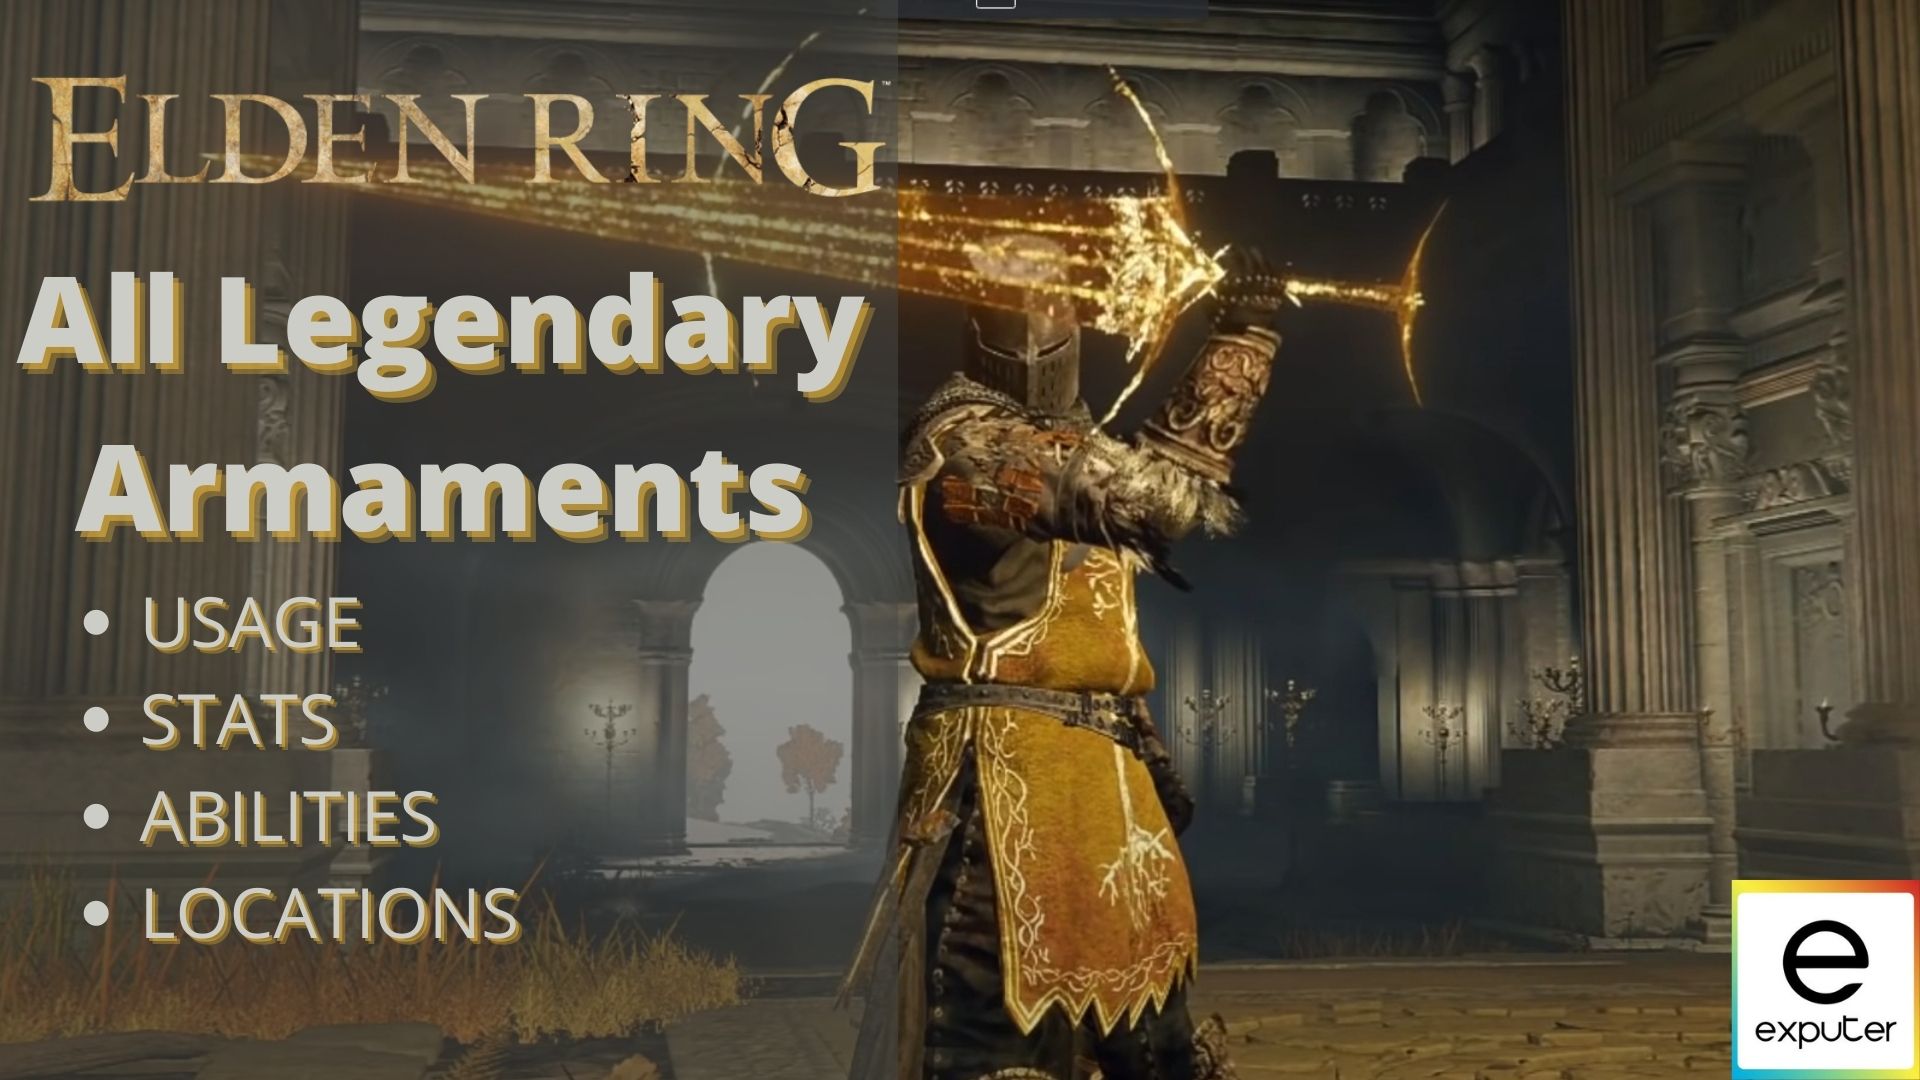 All legendary armaments elden ring